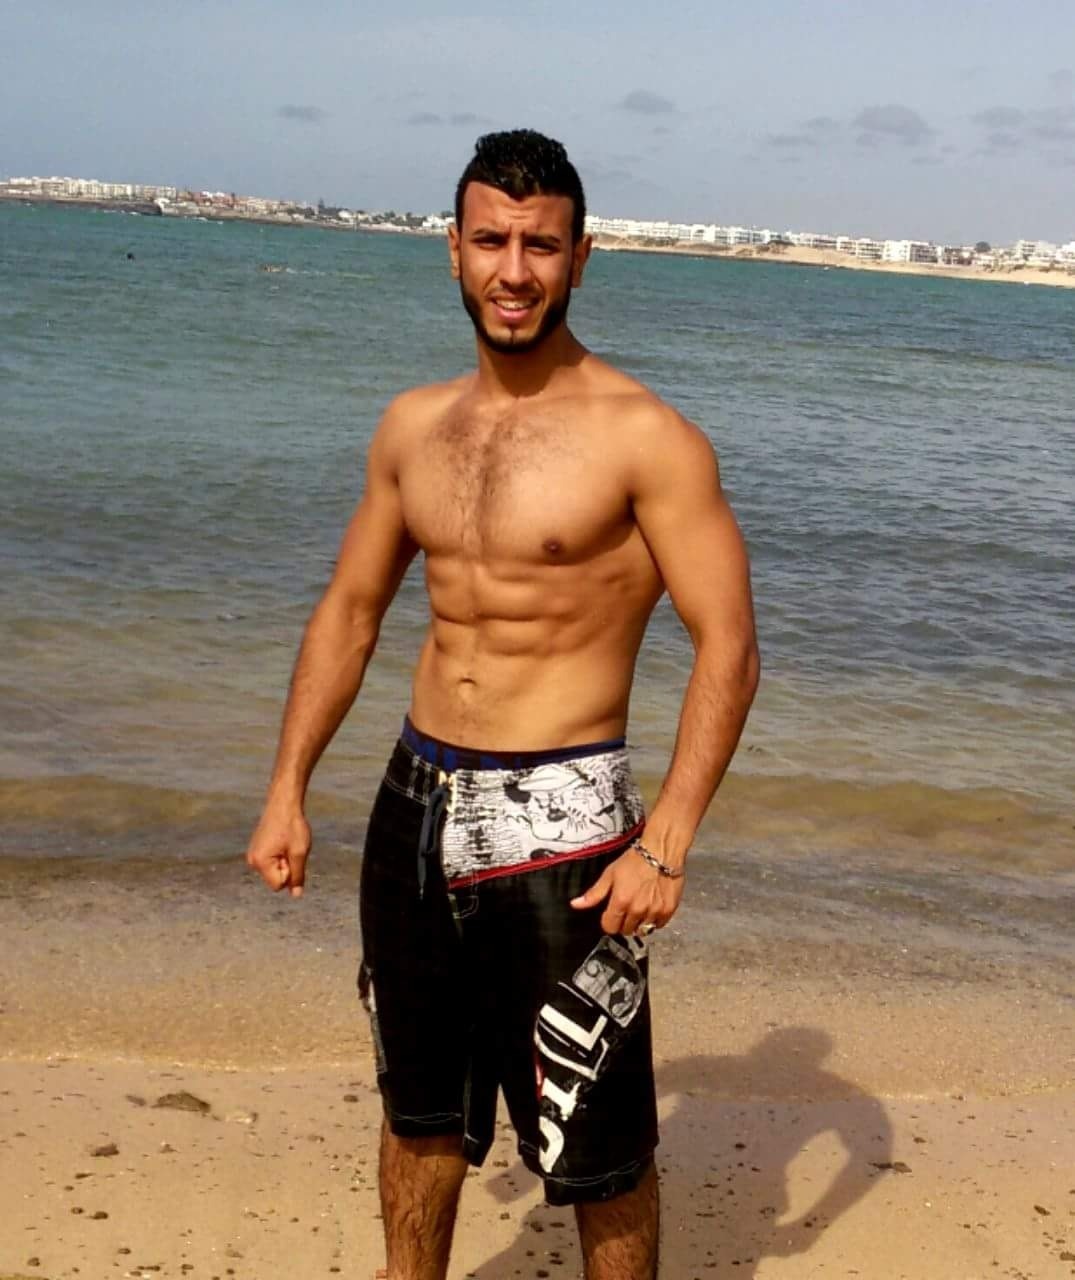 https://www.arabe-gay.com/wp-content/uploads/2018/10/pgj90chNWw1tmaziro1_1280.jpg